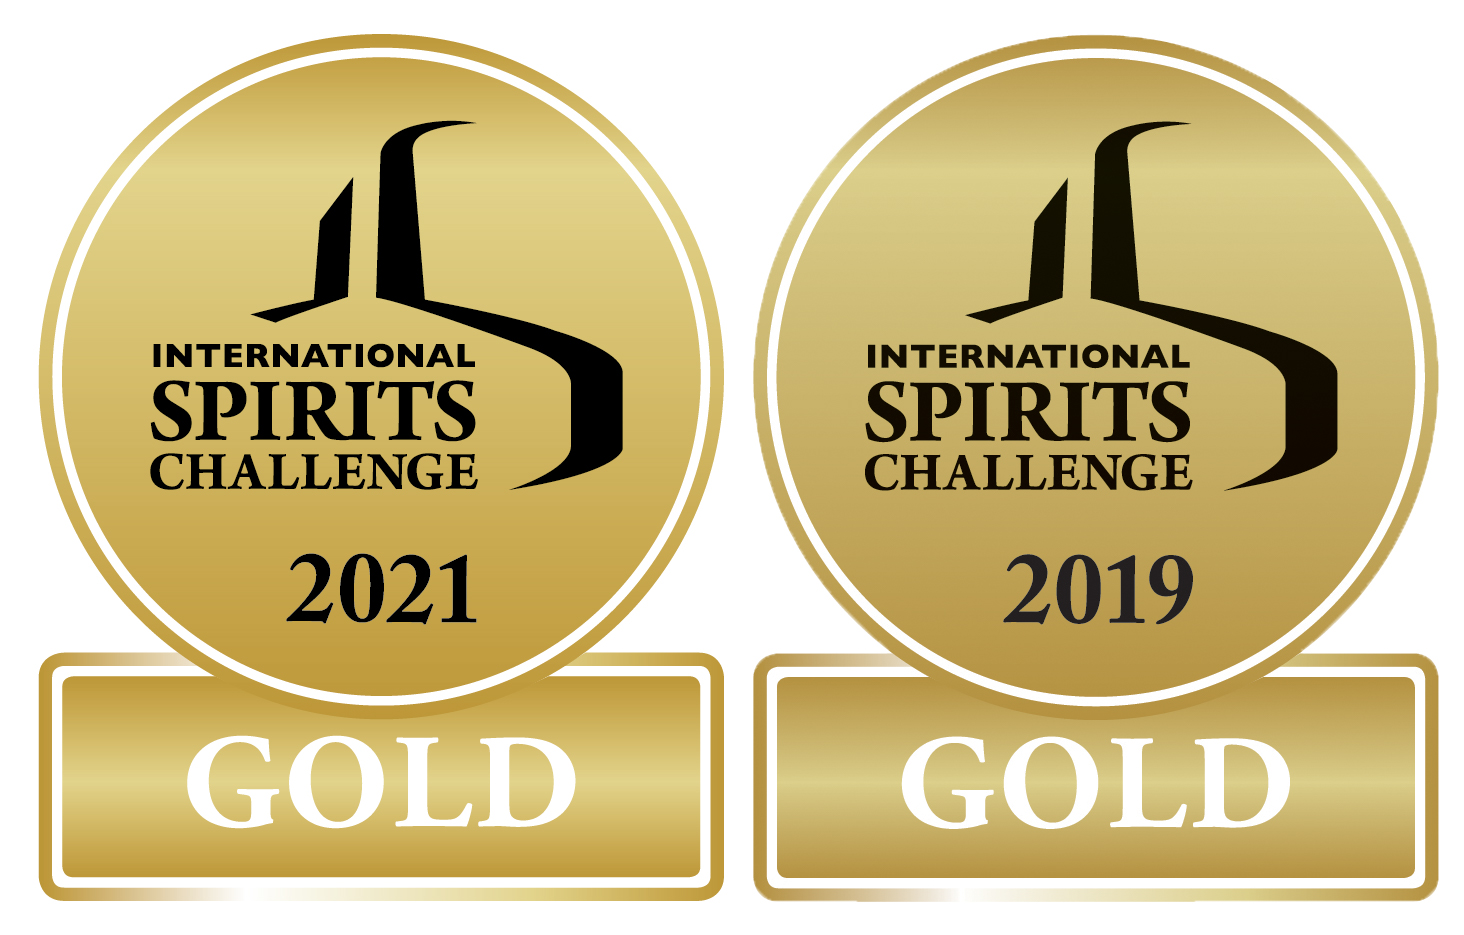 International spirits challenge 2021, Gold. International spirits challenge 2019, Gold.